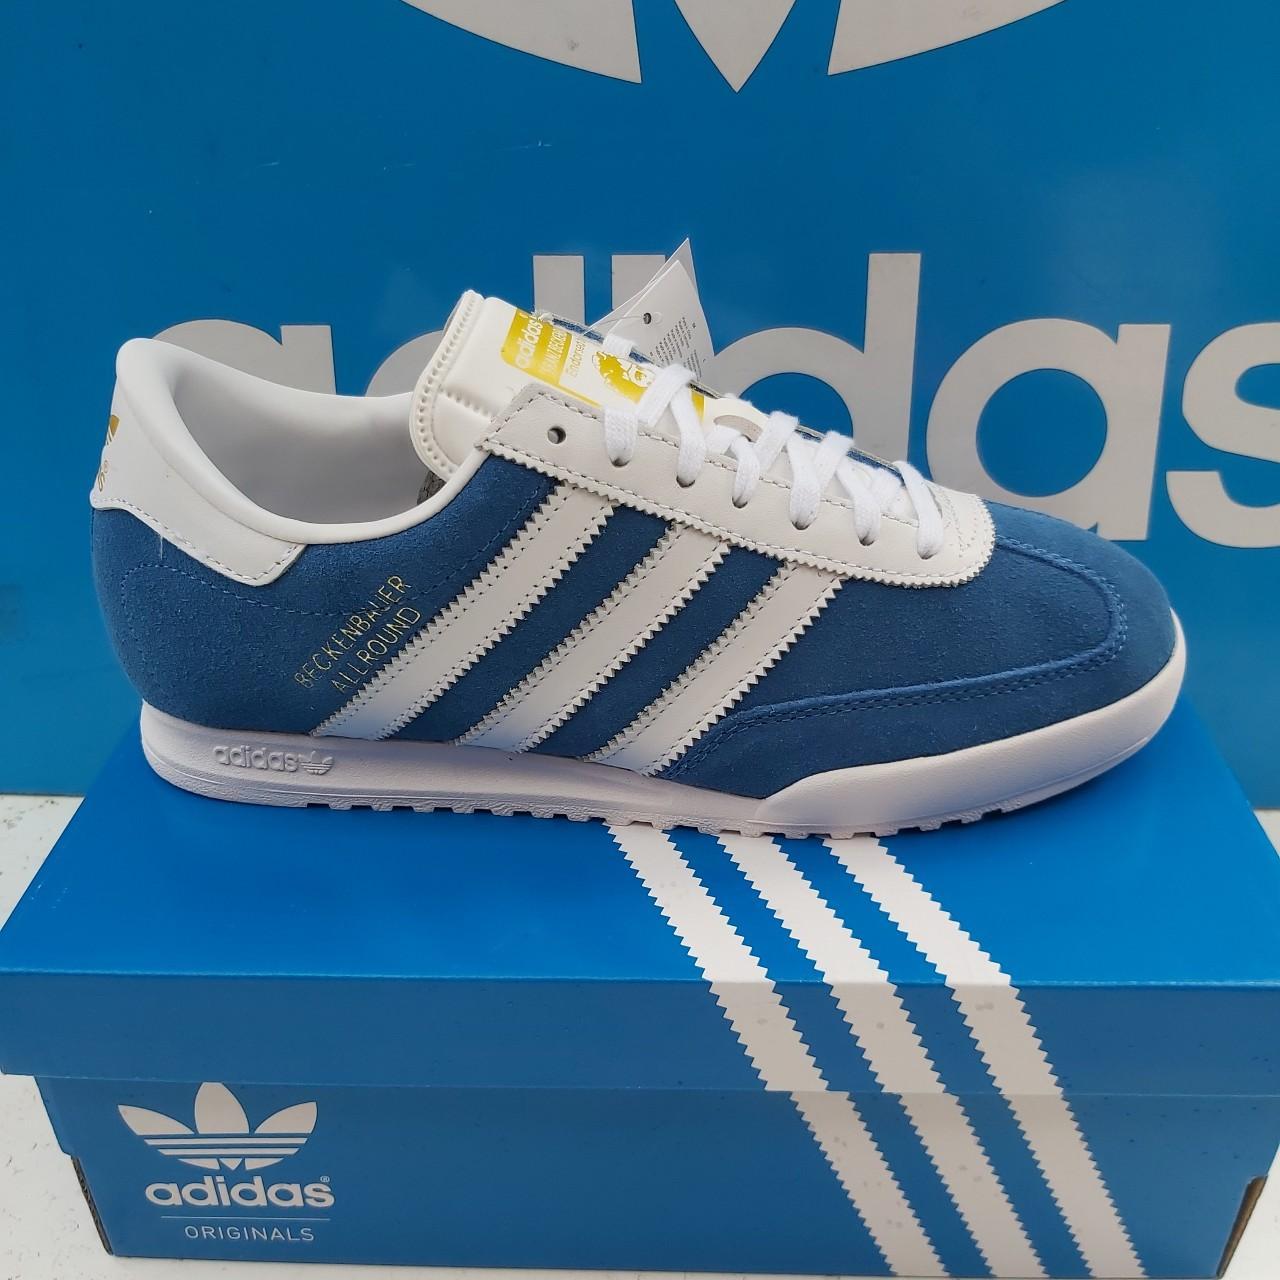 Adidas Originals Beckenbauer Allround, blue suede... Depop